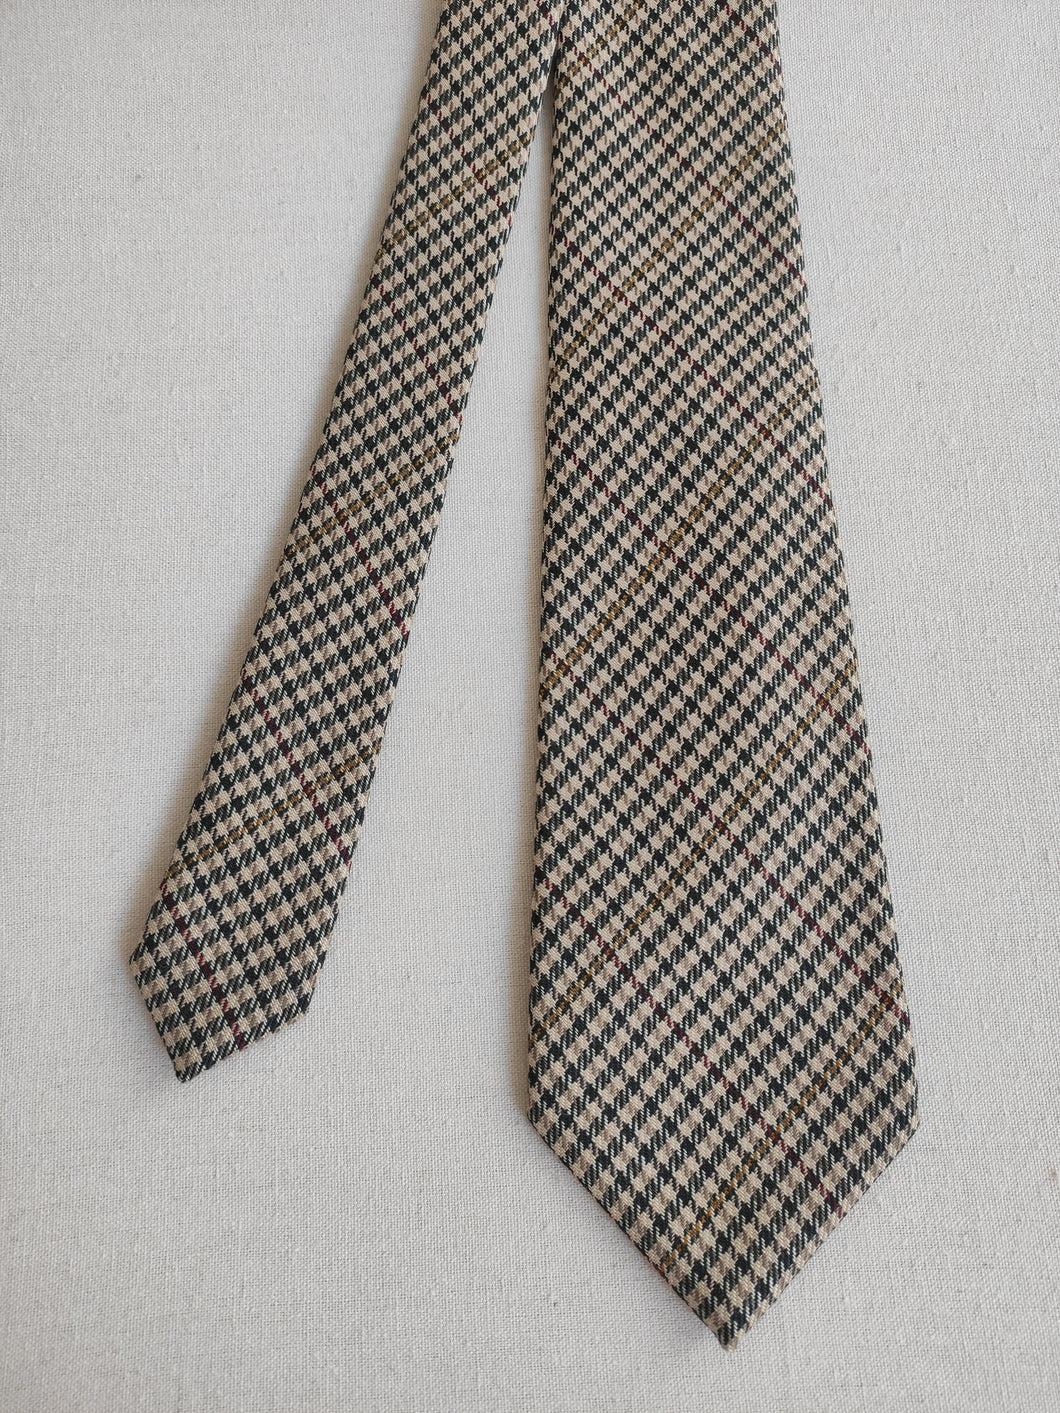 Etro Milano cravate vintage en laine Made in Italy